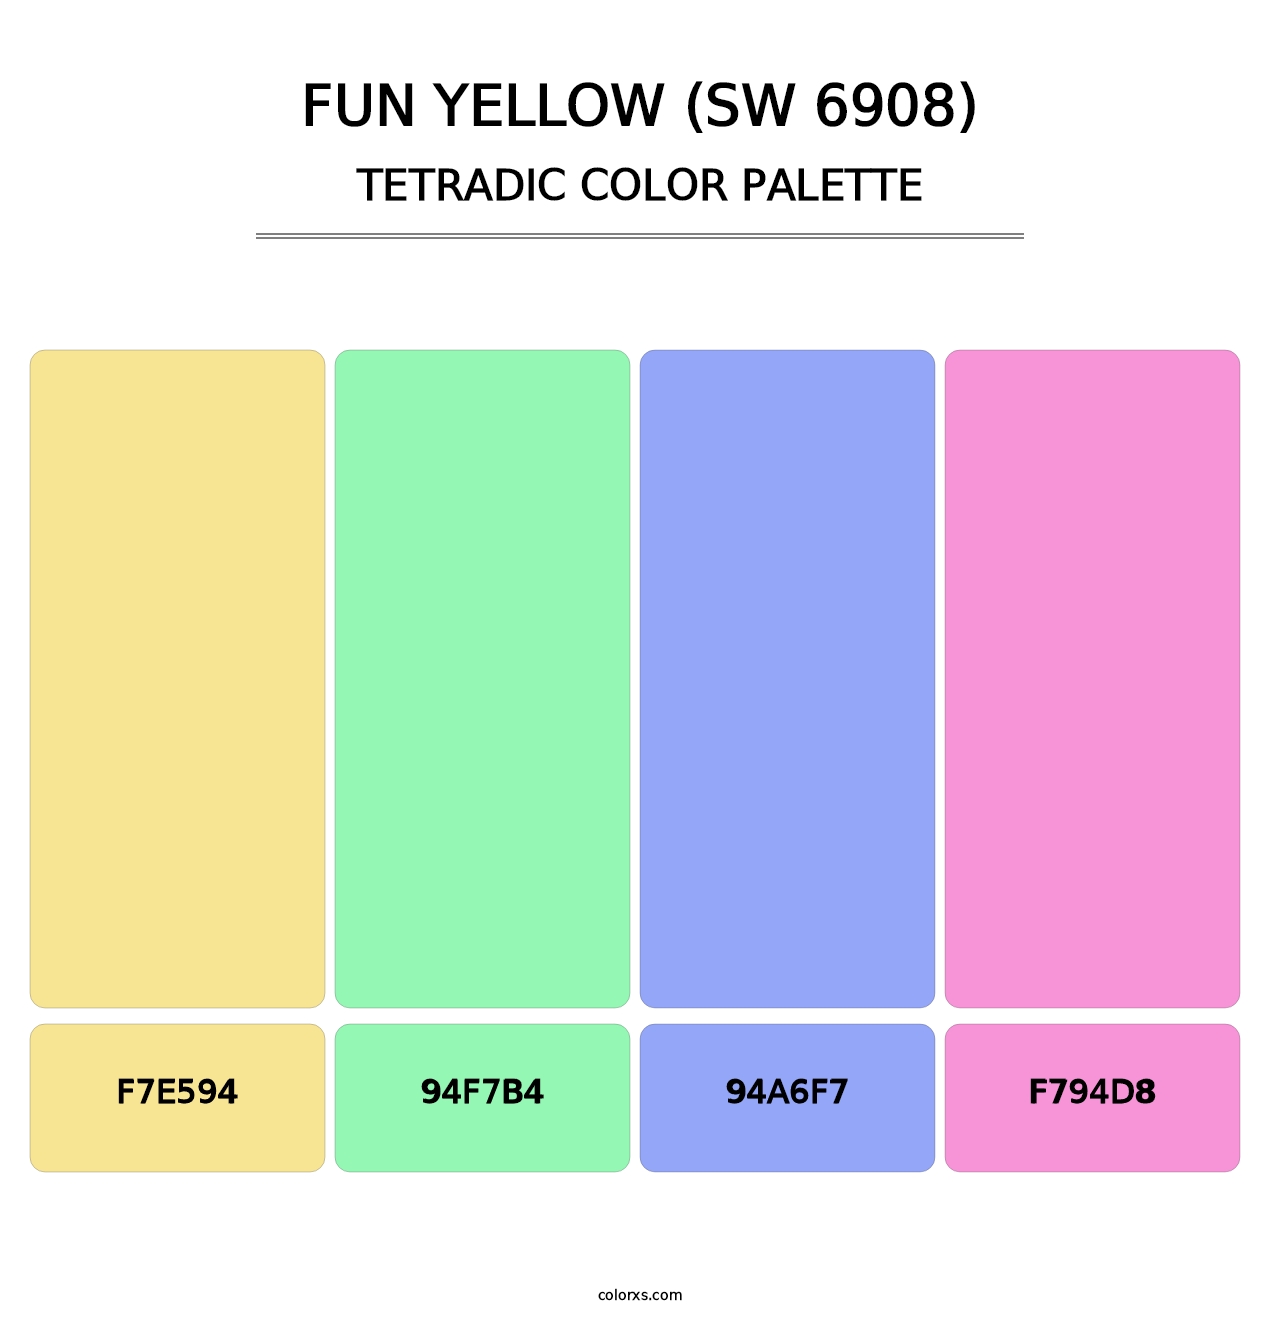 Fun Yellow (SW 6908) - Tetradic Color Palette